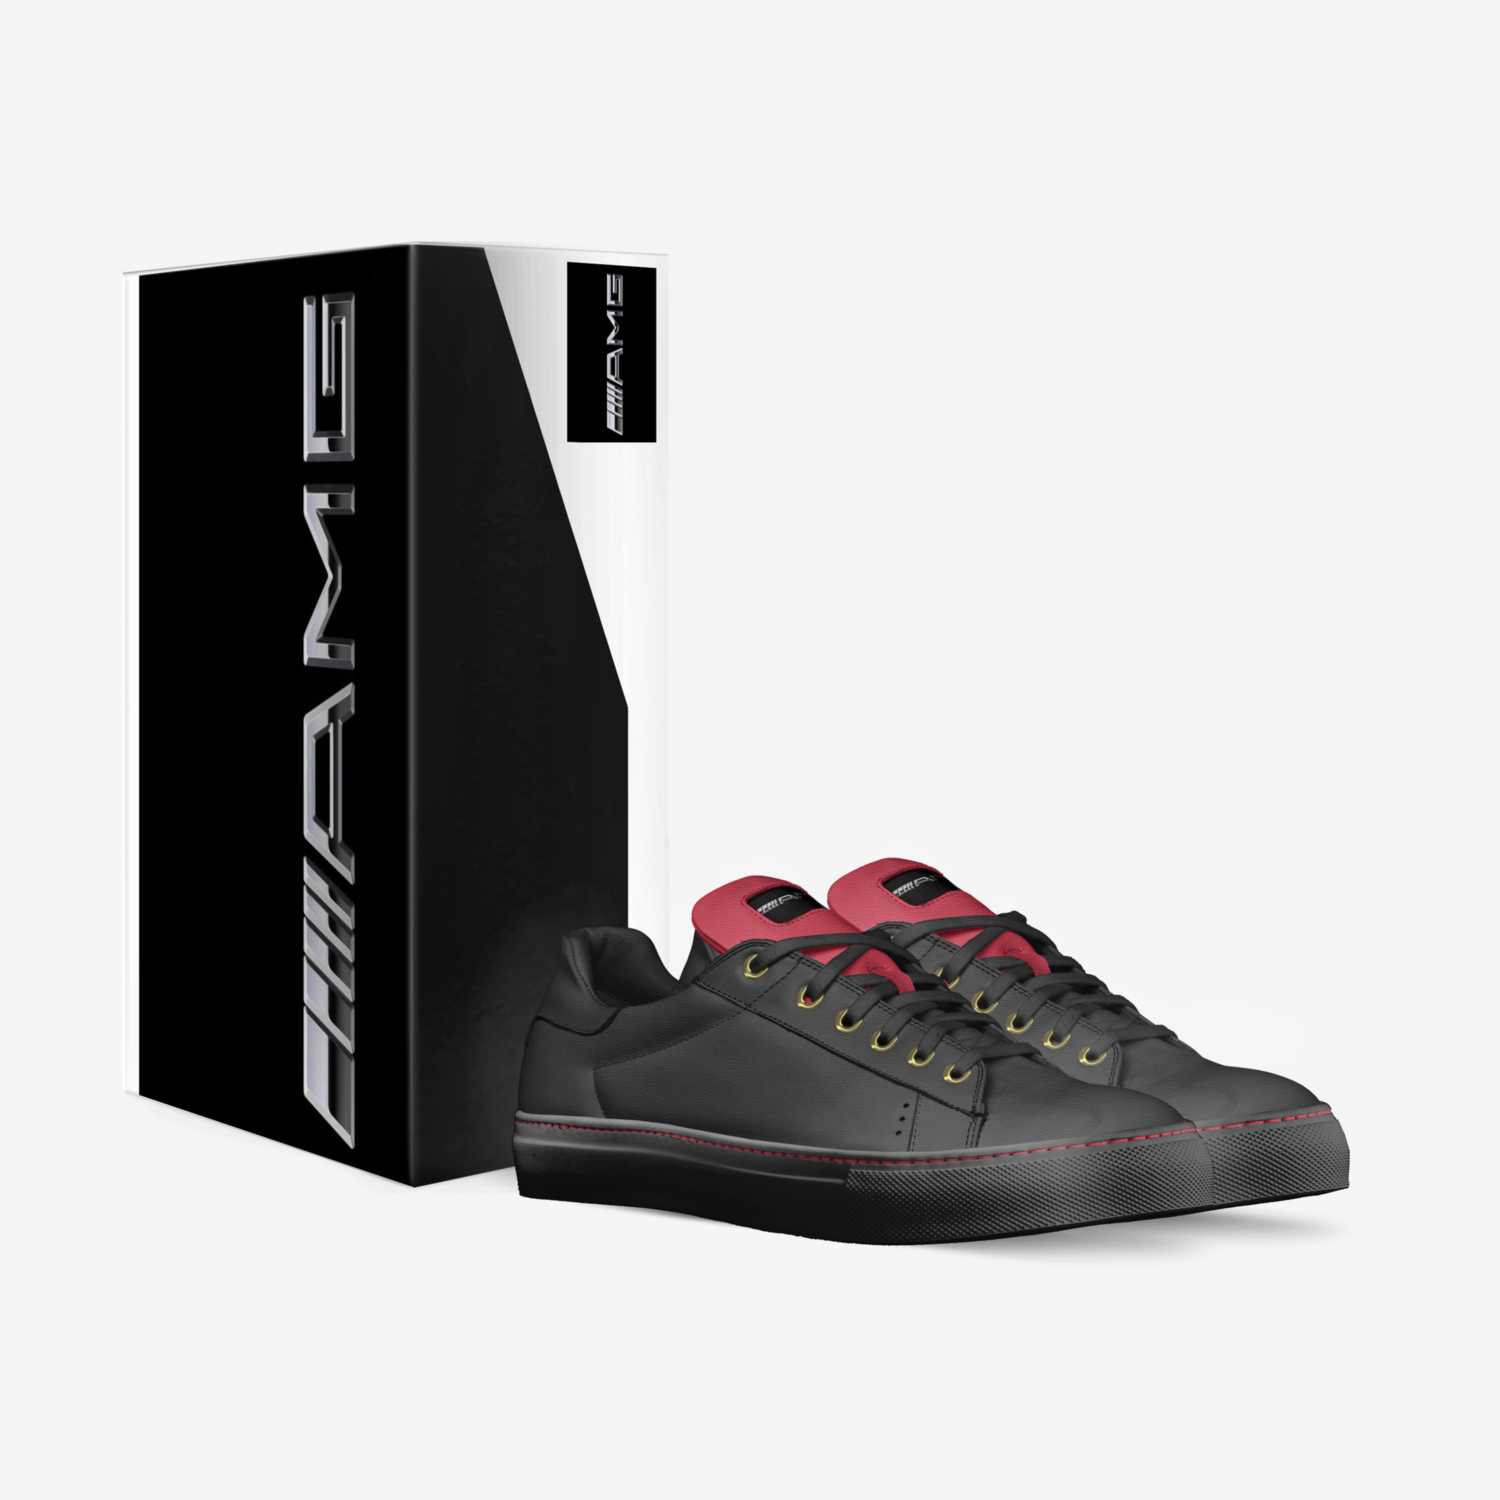 DIWAKAR custom made in Italy shoes by Ruumi Abassov | Box view